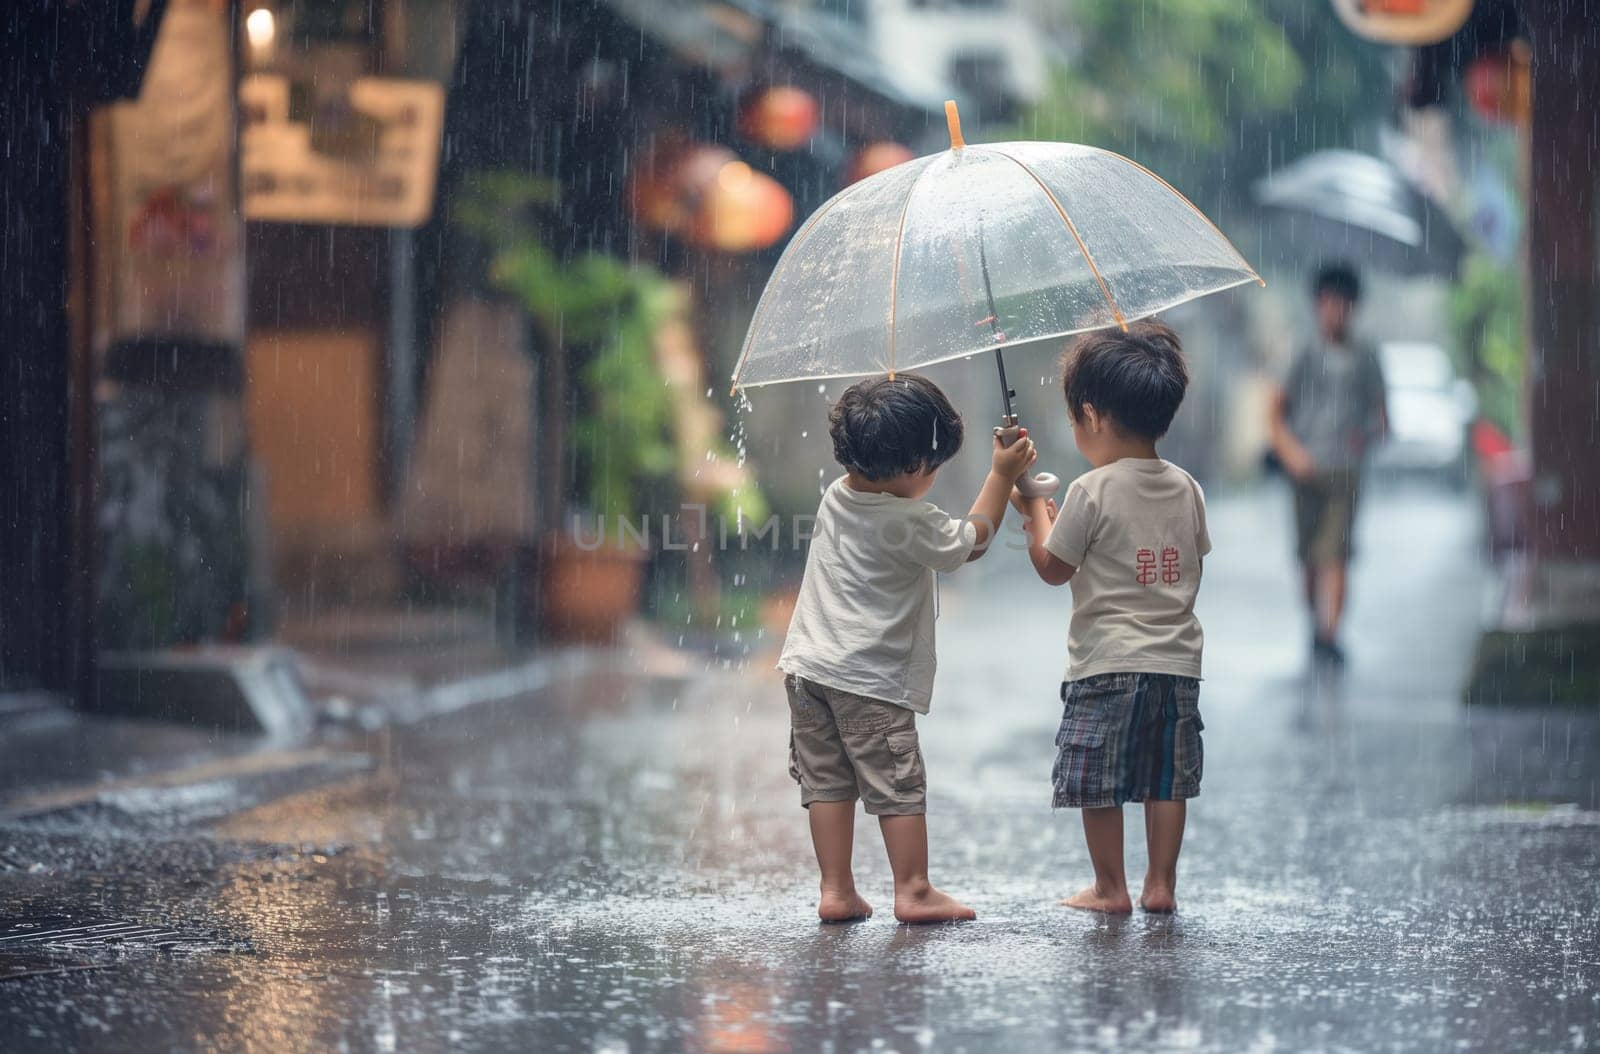 Childhood curiosity in the rain by gcm